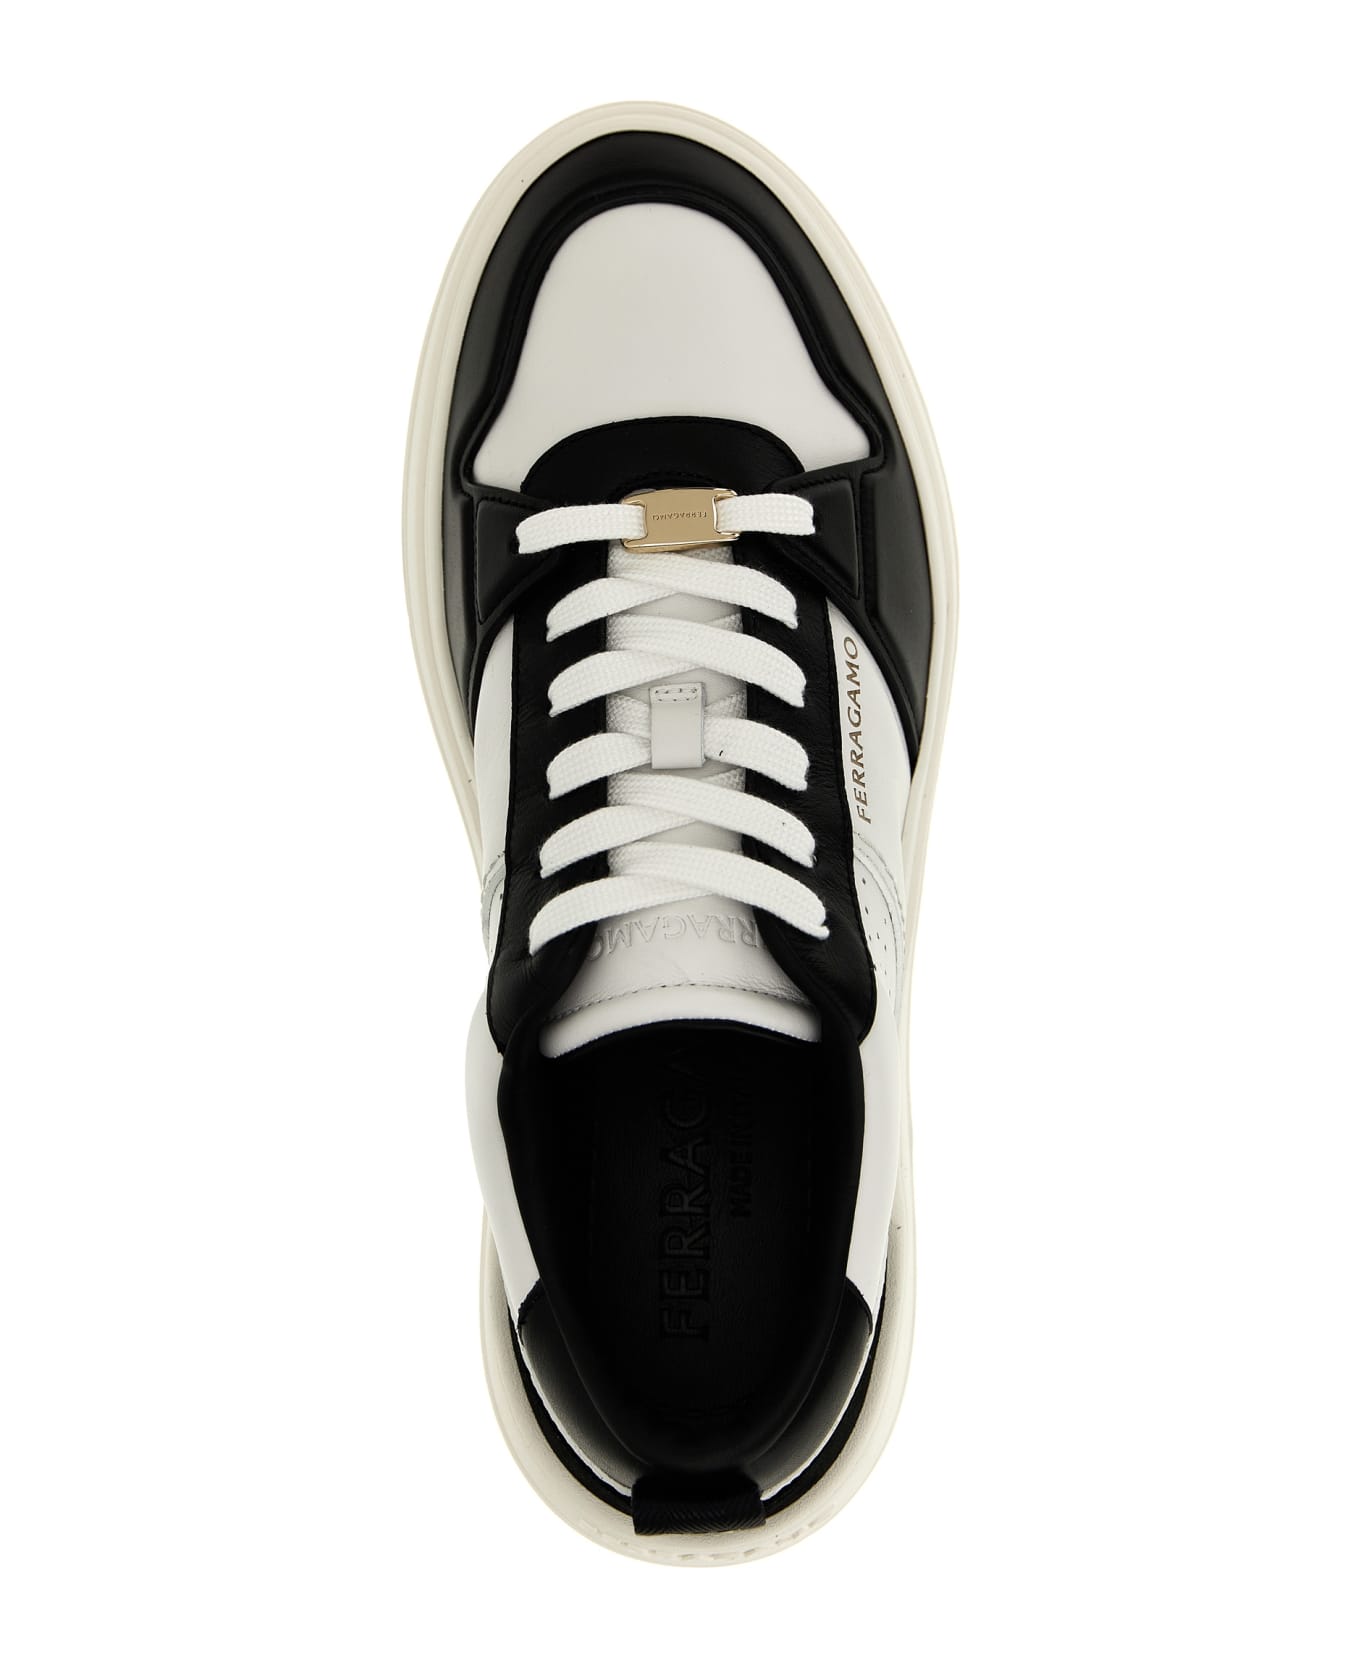 Ferragamo Two-tone Leather Sneakers - White/Black